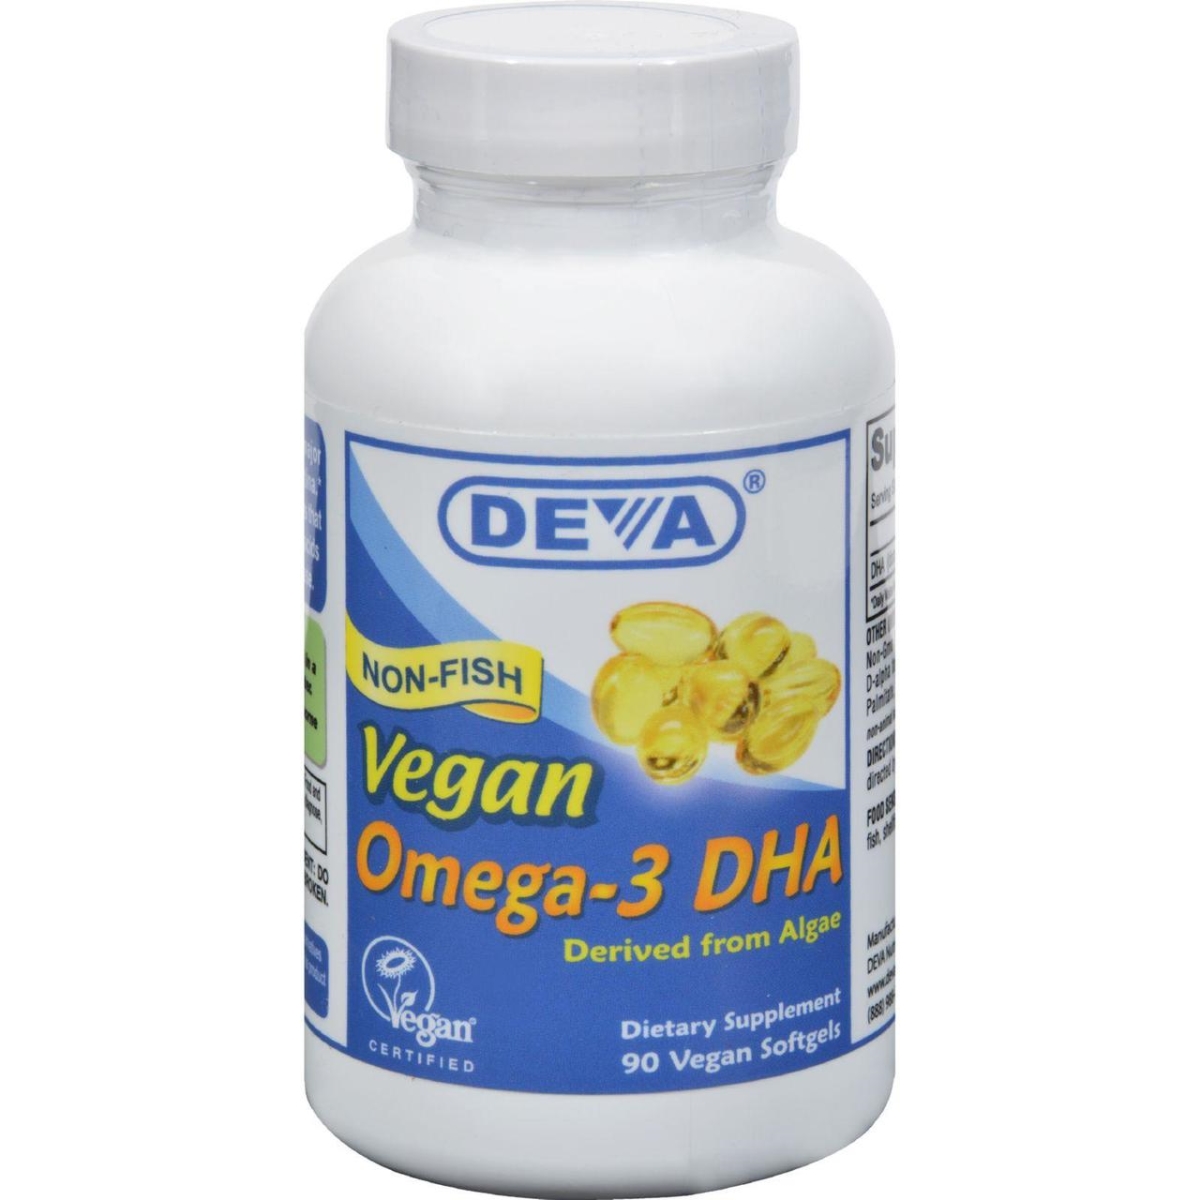 Hg0233924 Omega-3 Dha, 90 Vegan Softgels